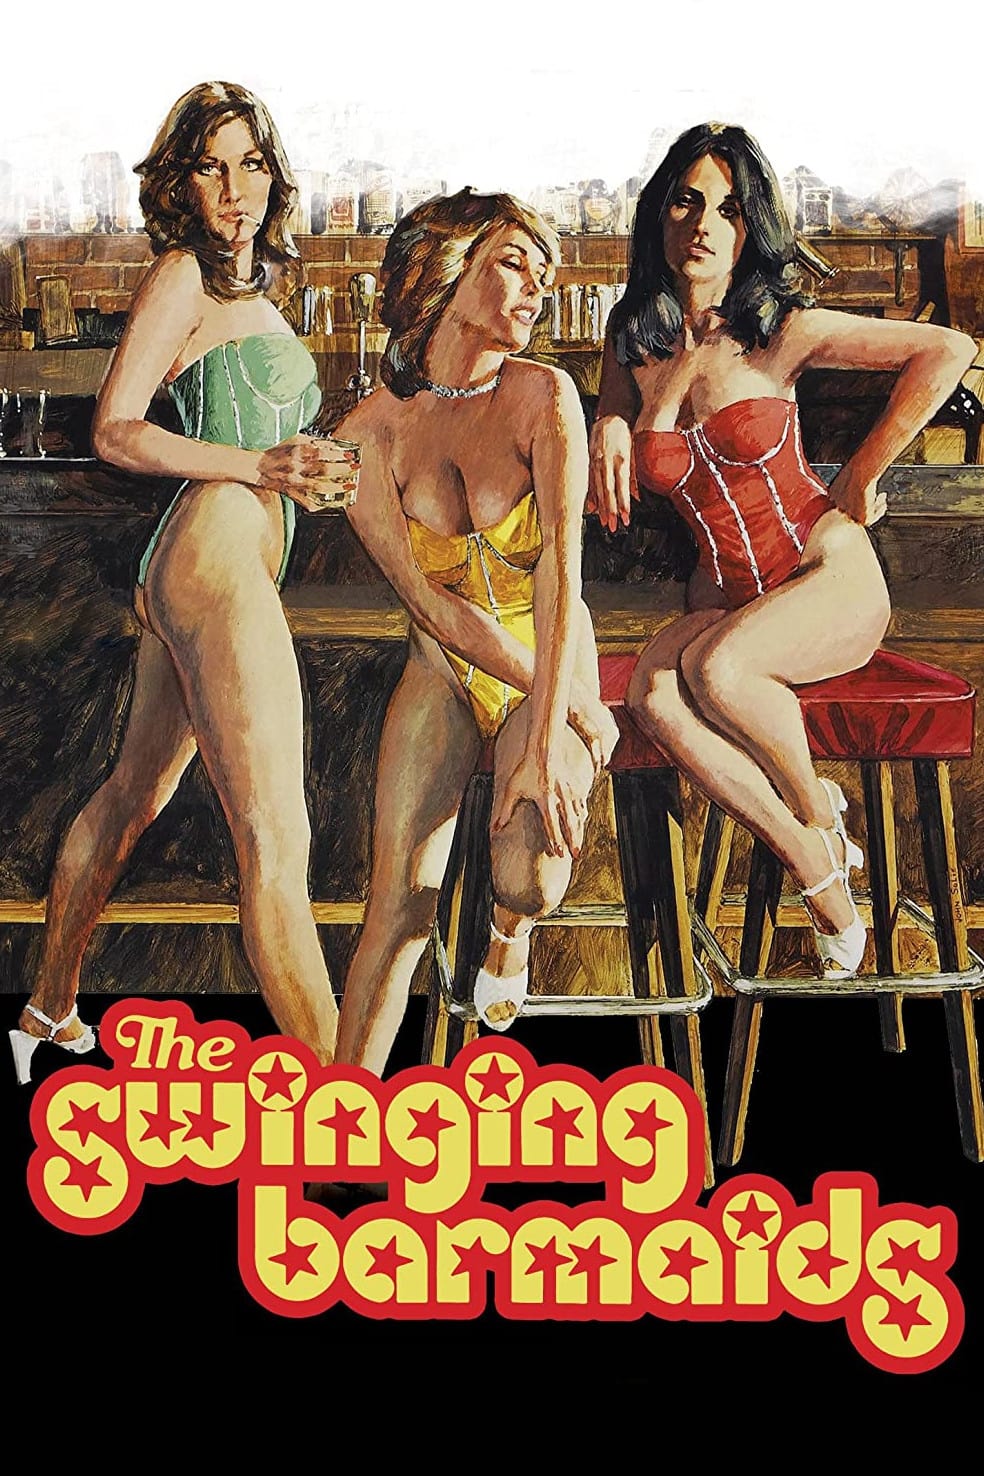 The Swinging Barmaids film